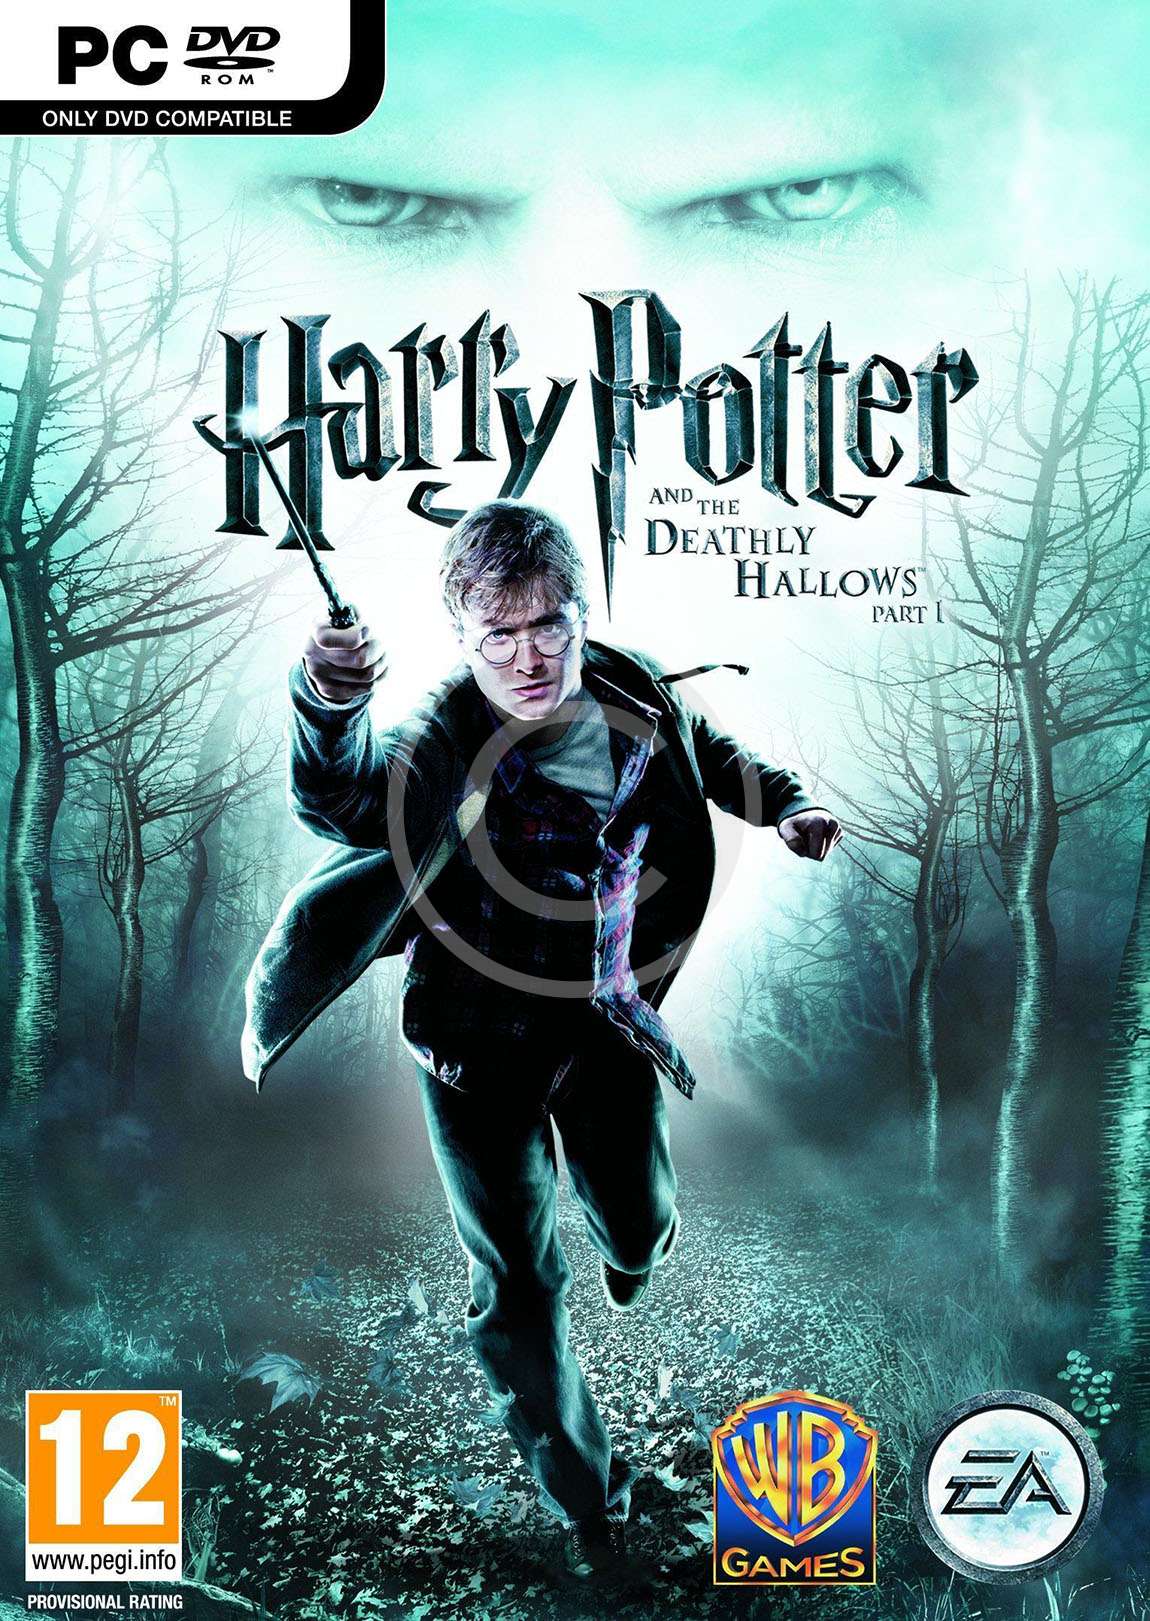 Harry Potter Video Game L'EIX